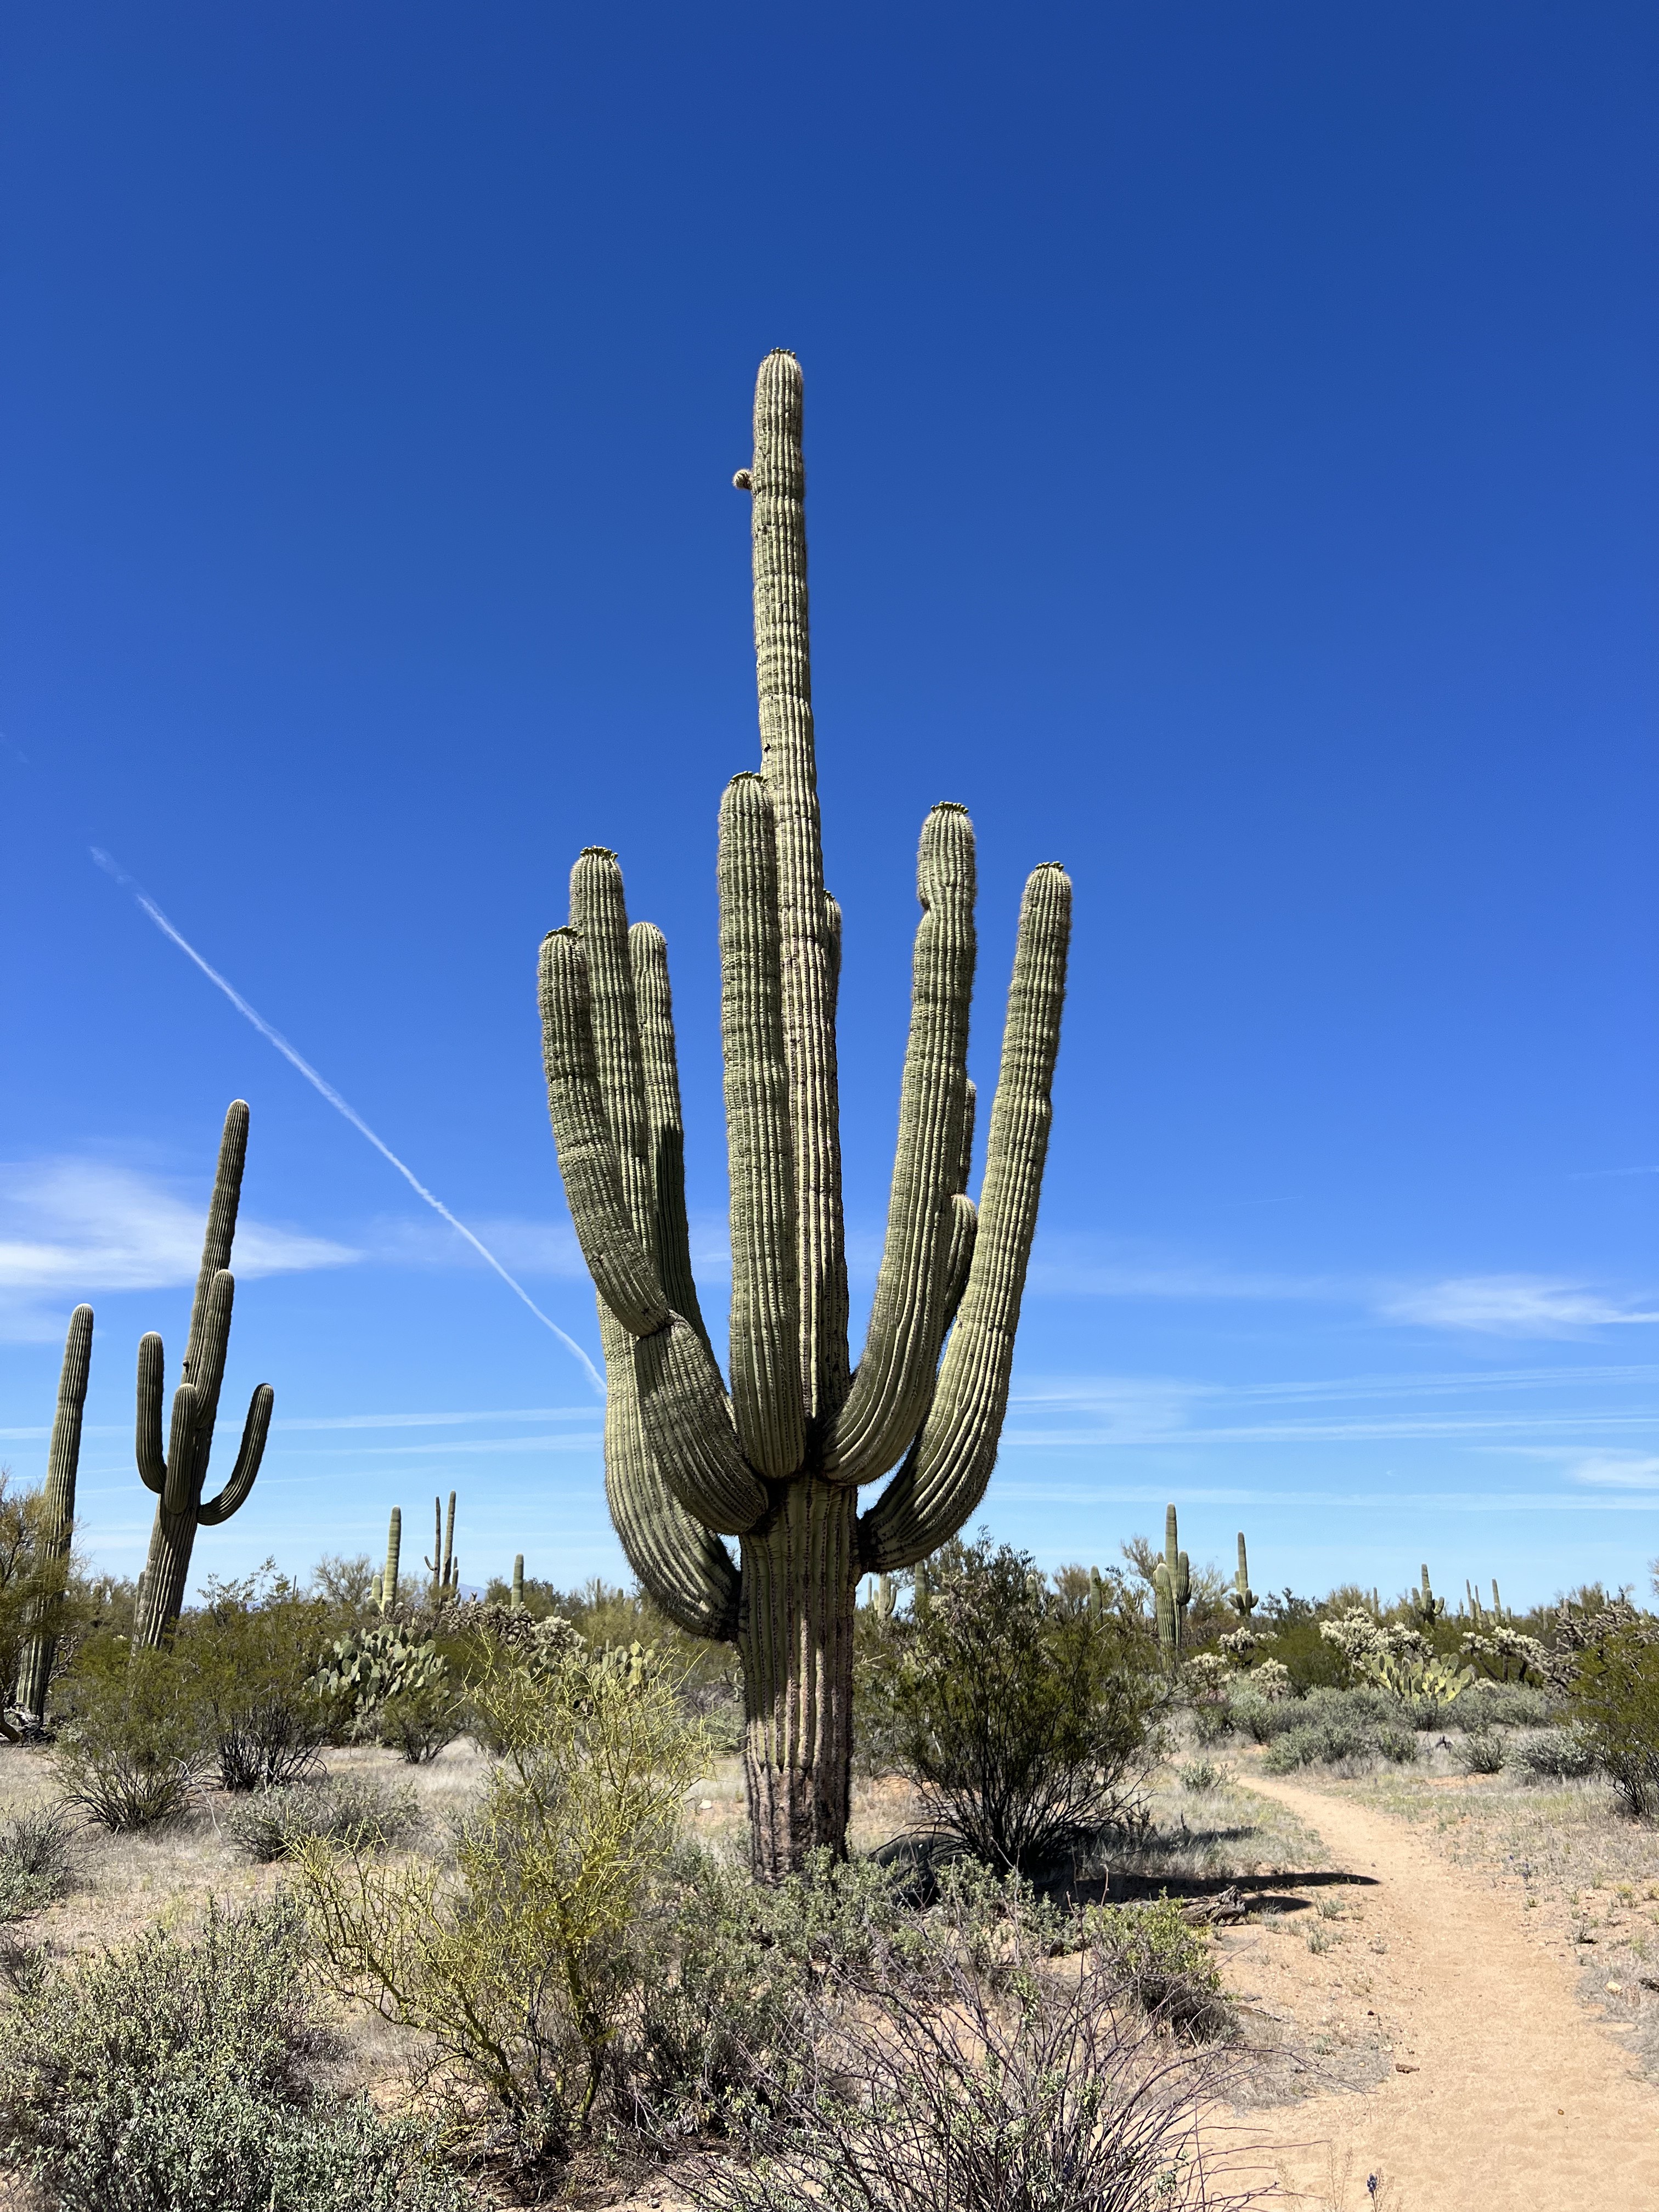 A large saguaro cactus